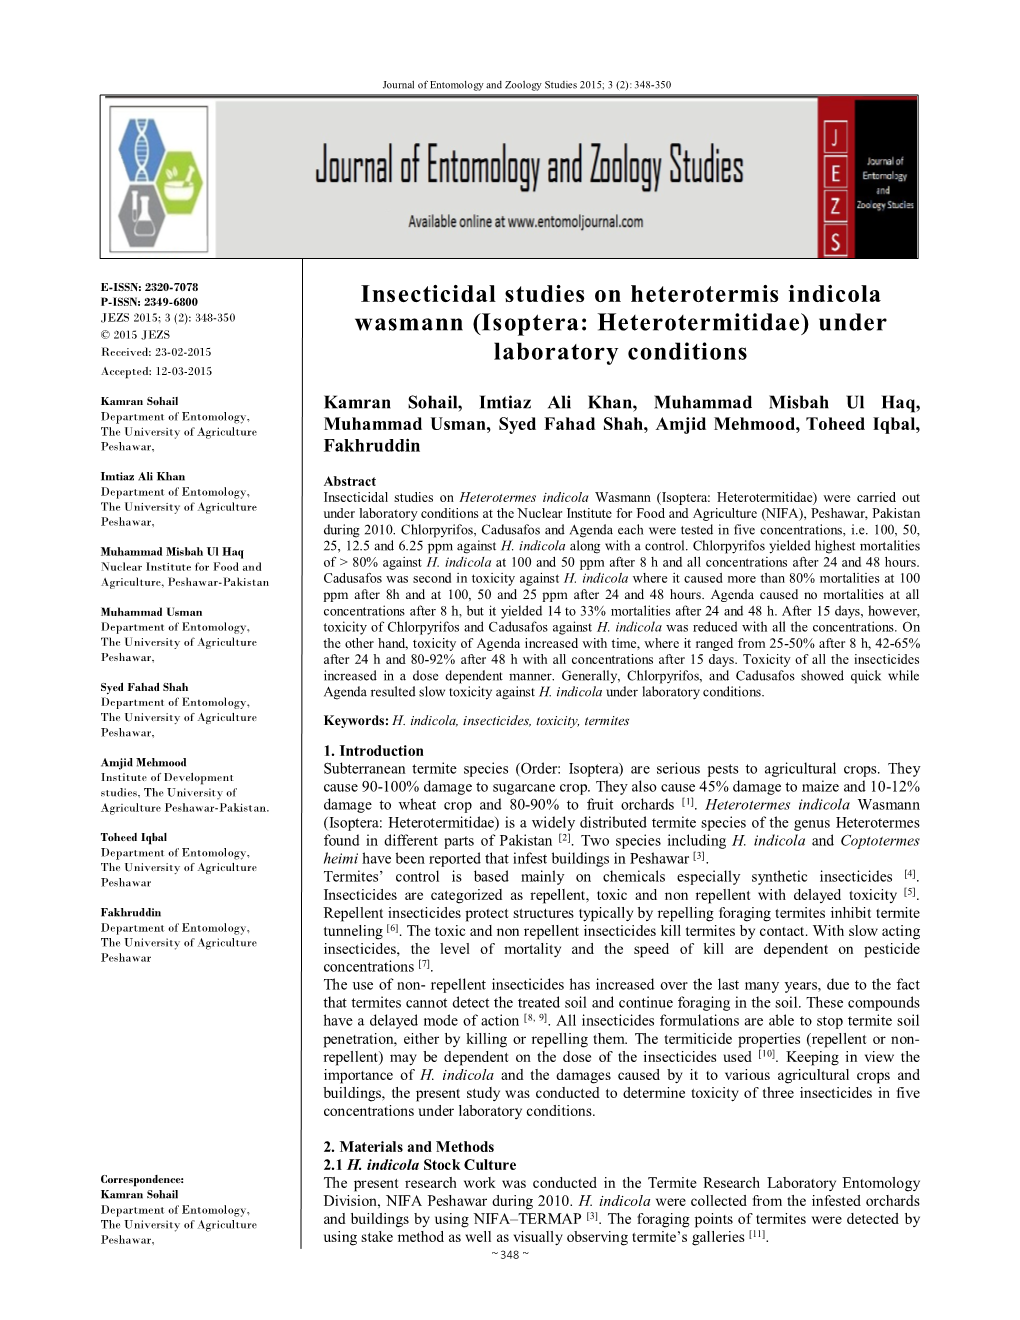 Insecticidal Studies on Heterotermis Indicola Wasmann (Isoptera